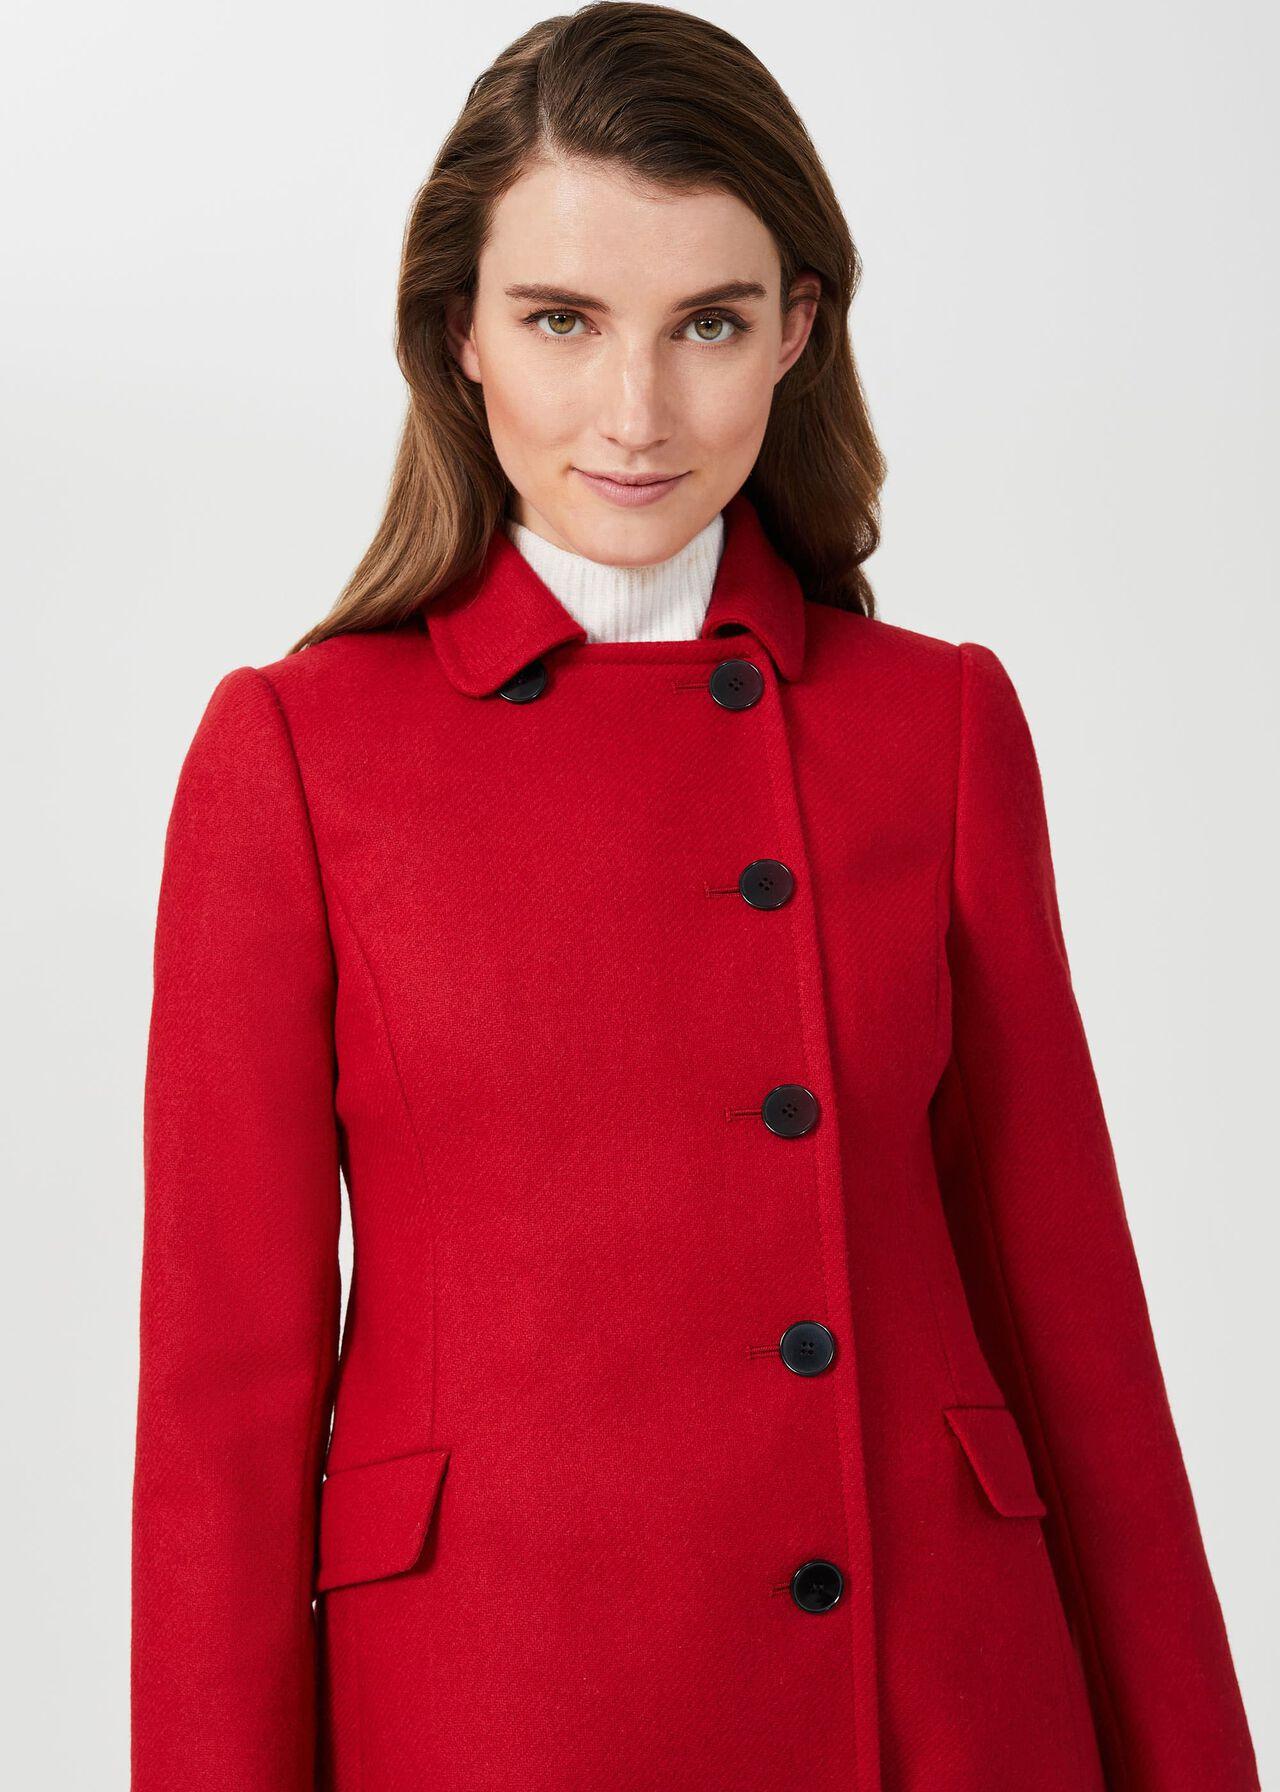 Hobbs Odette Wool Coat in Red - Lyst